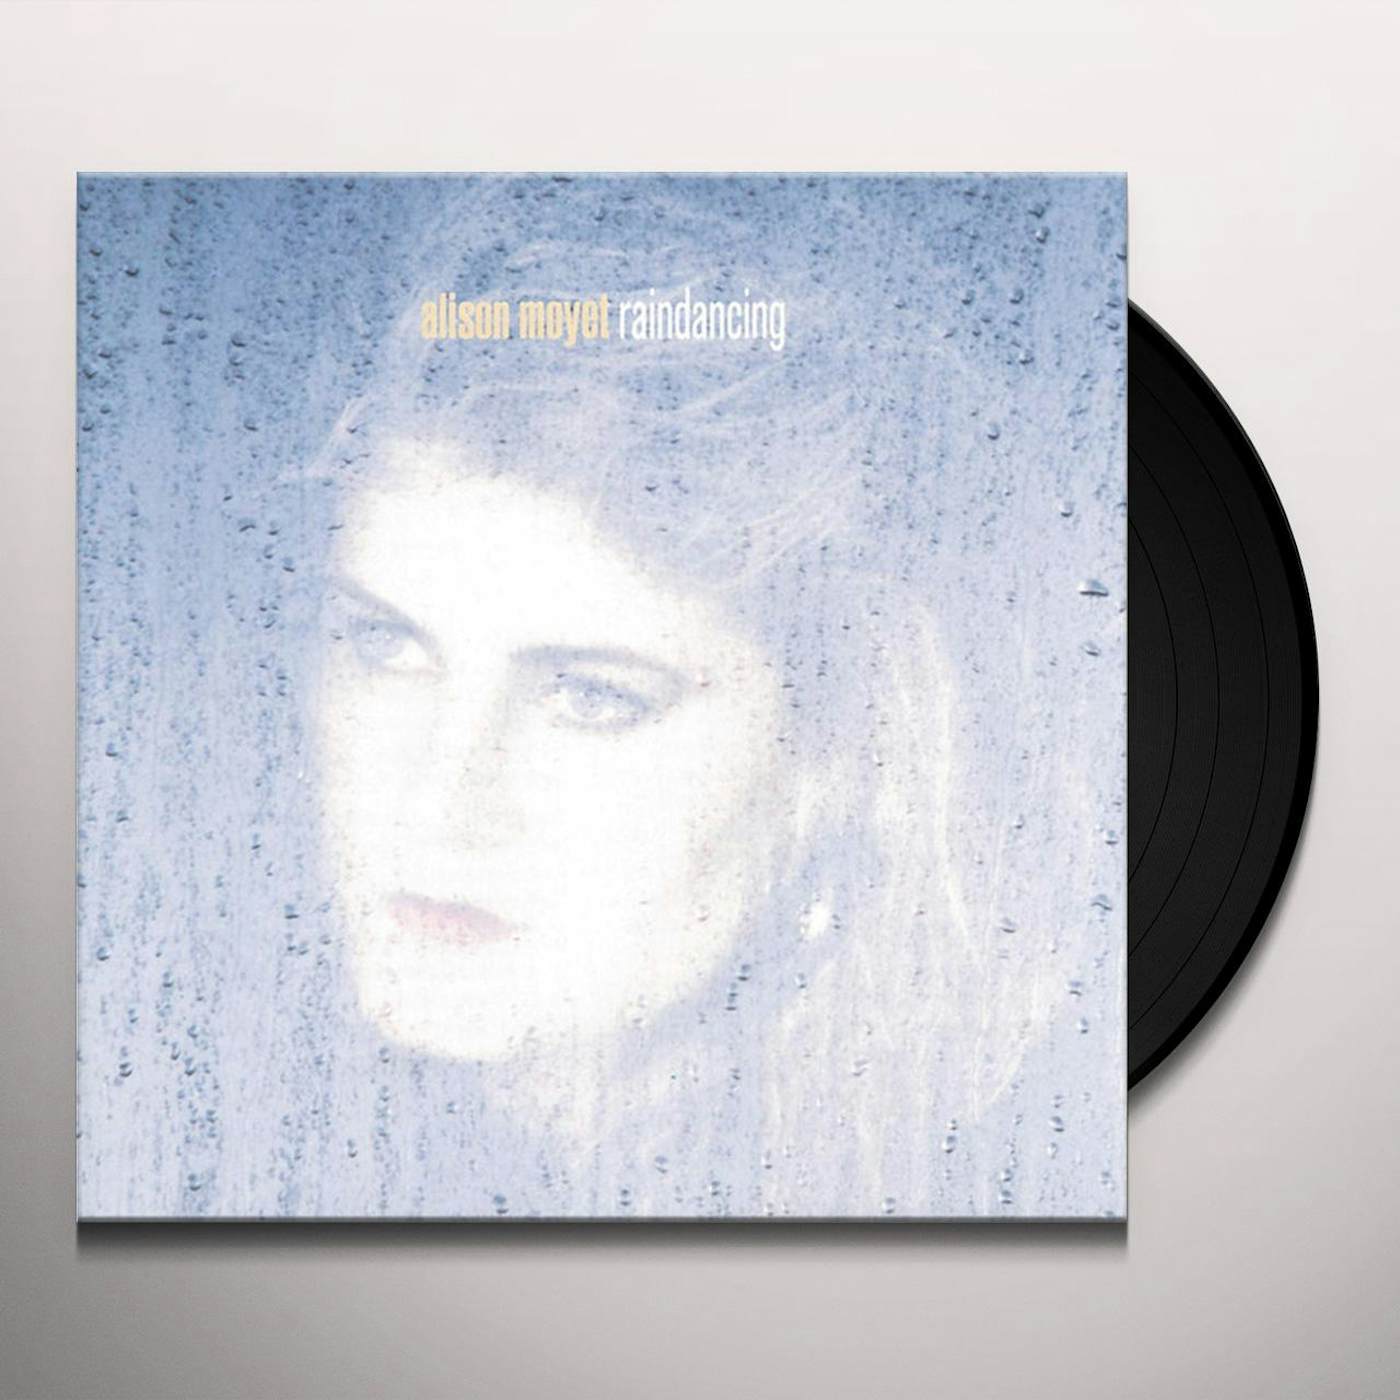 Alison Moyet Raindancing Vinyl Record